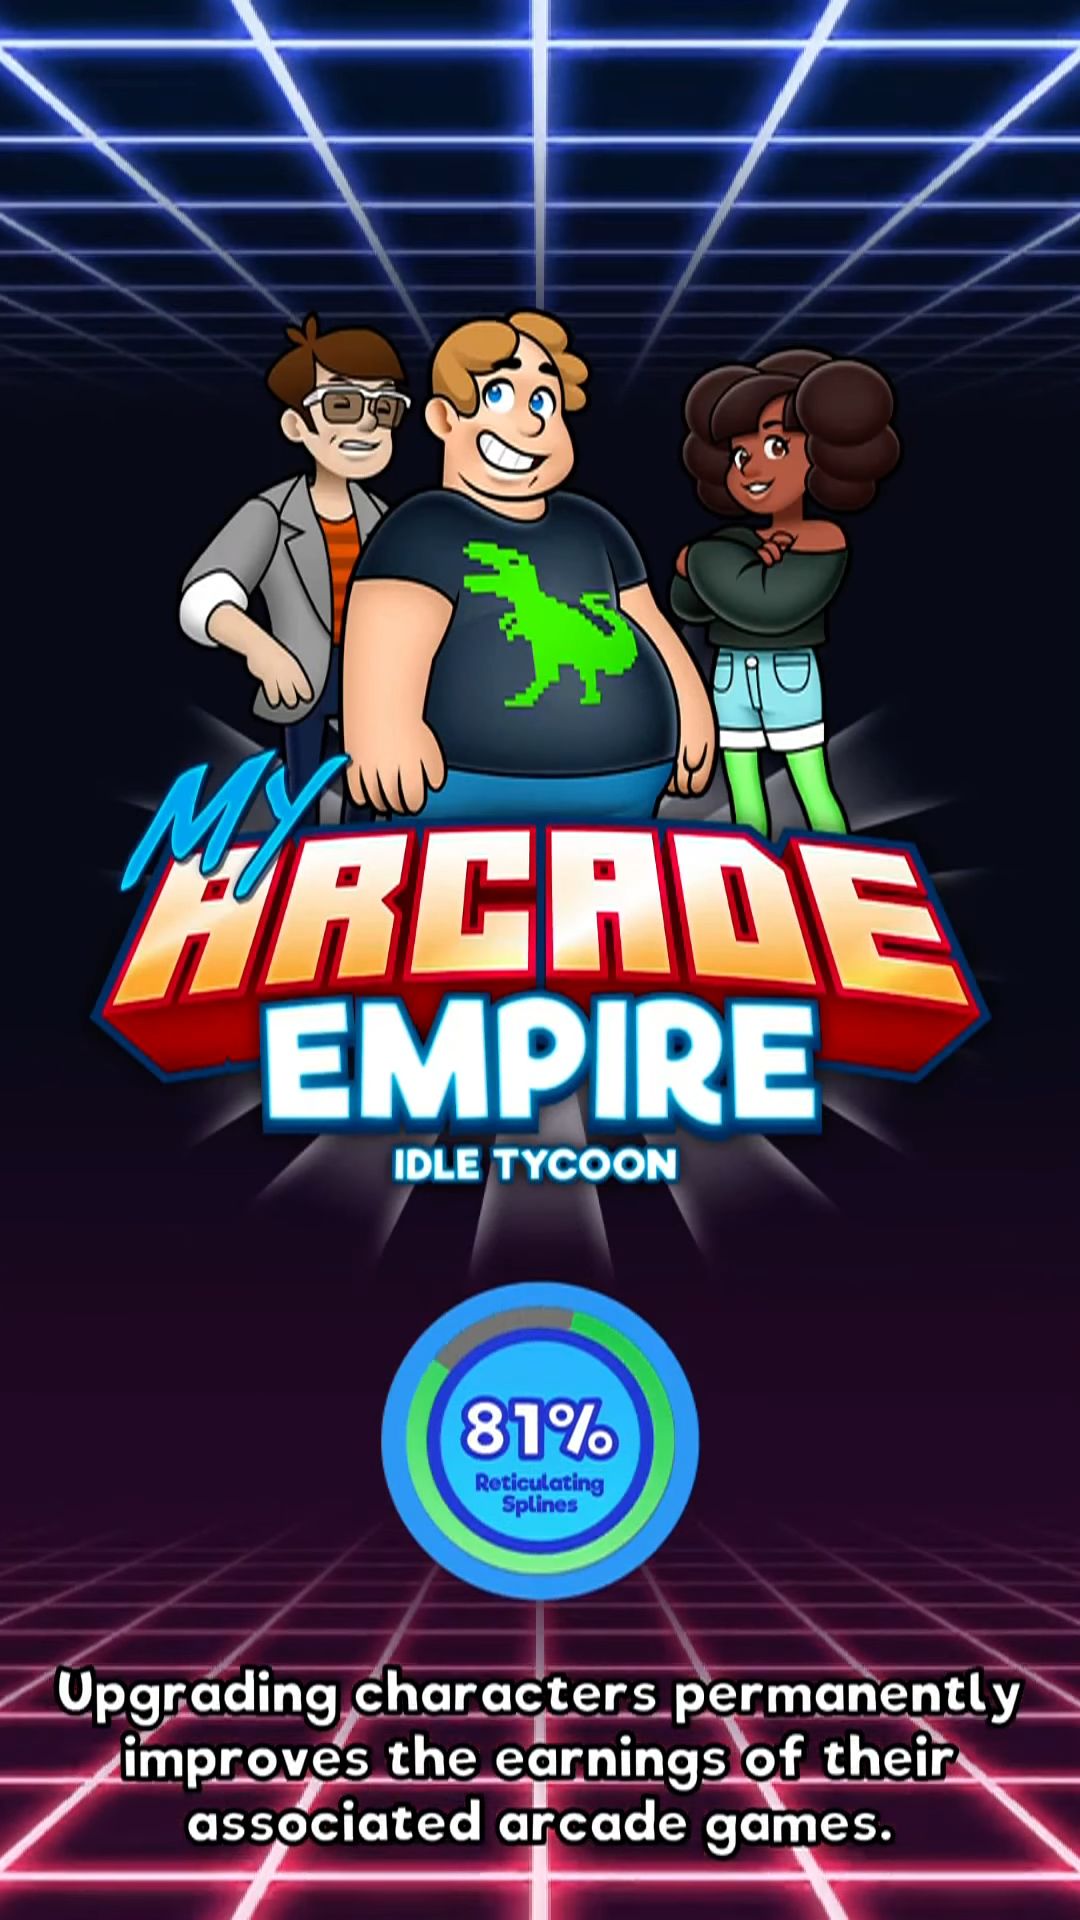 Télécharger My Arcade Empire - Idle Tycoon pour Android gratuit.